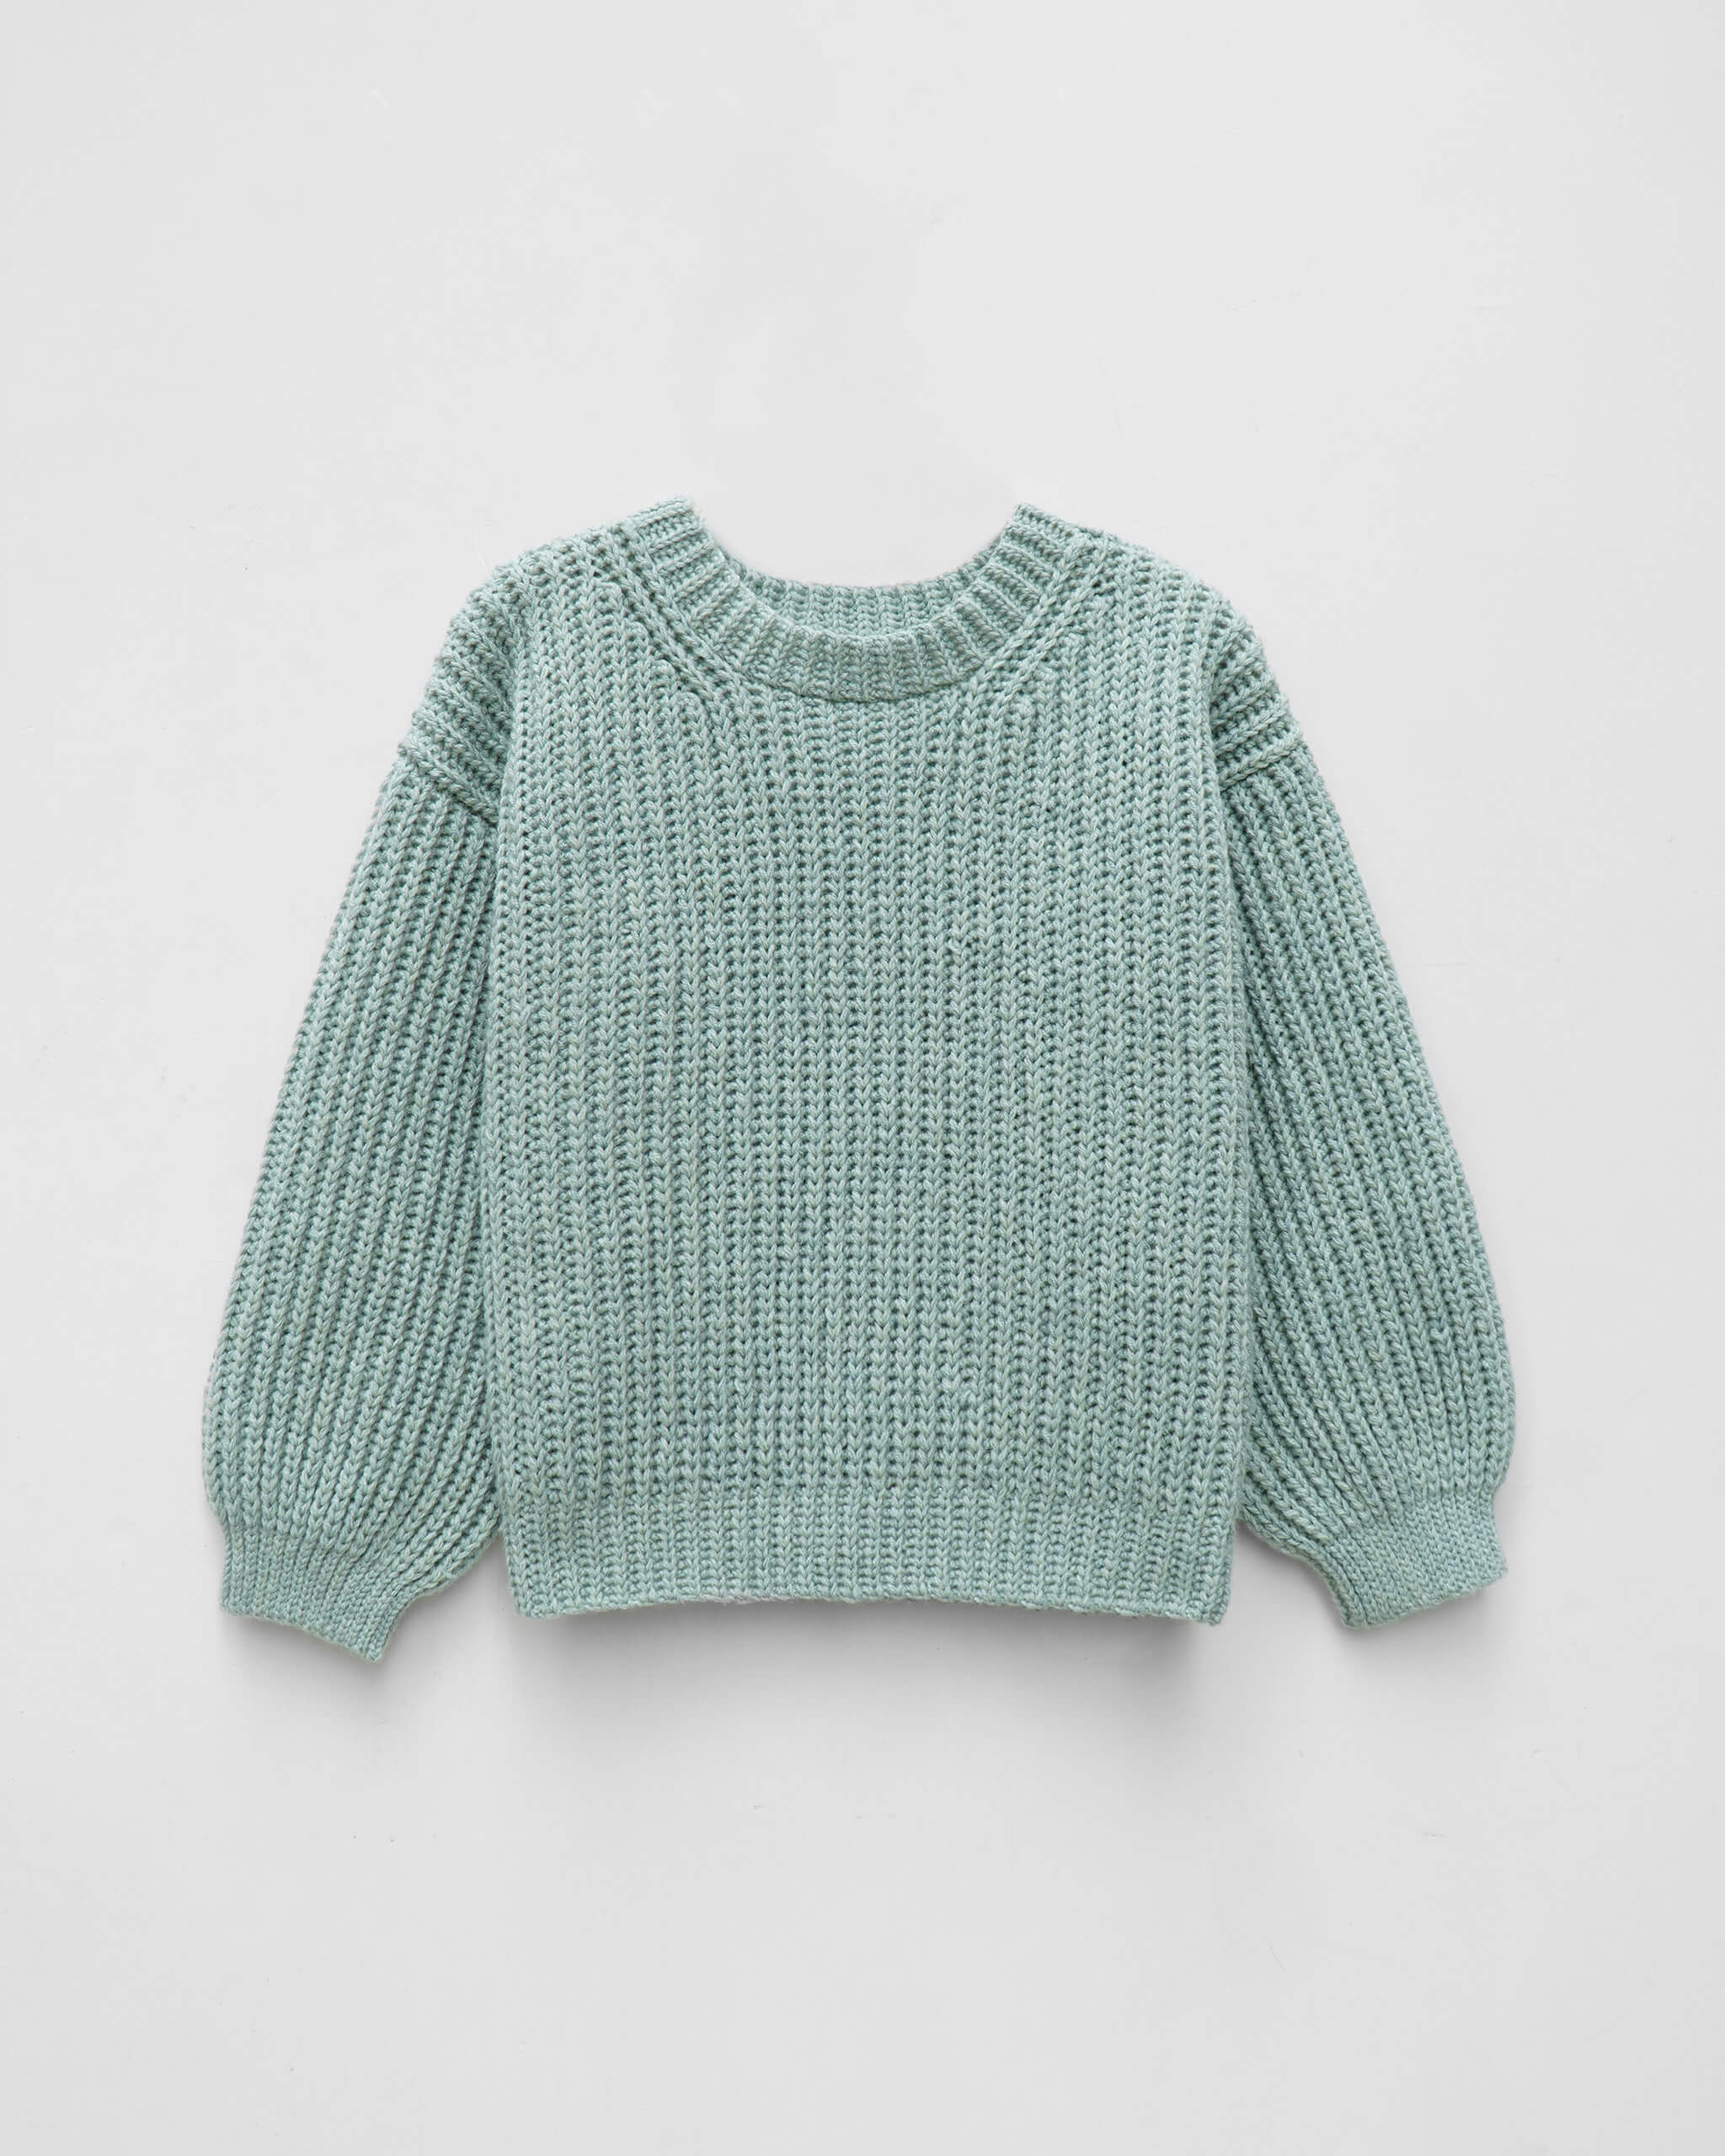 Sweater No.40 | Ribbed sweater crochet pattern – Daisy & Peace